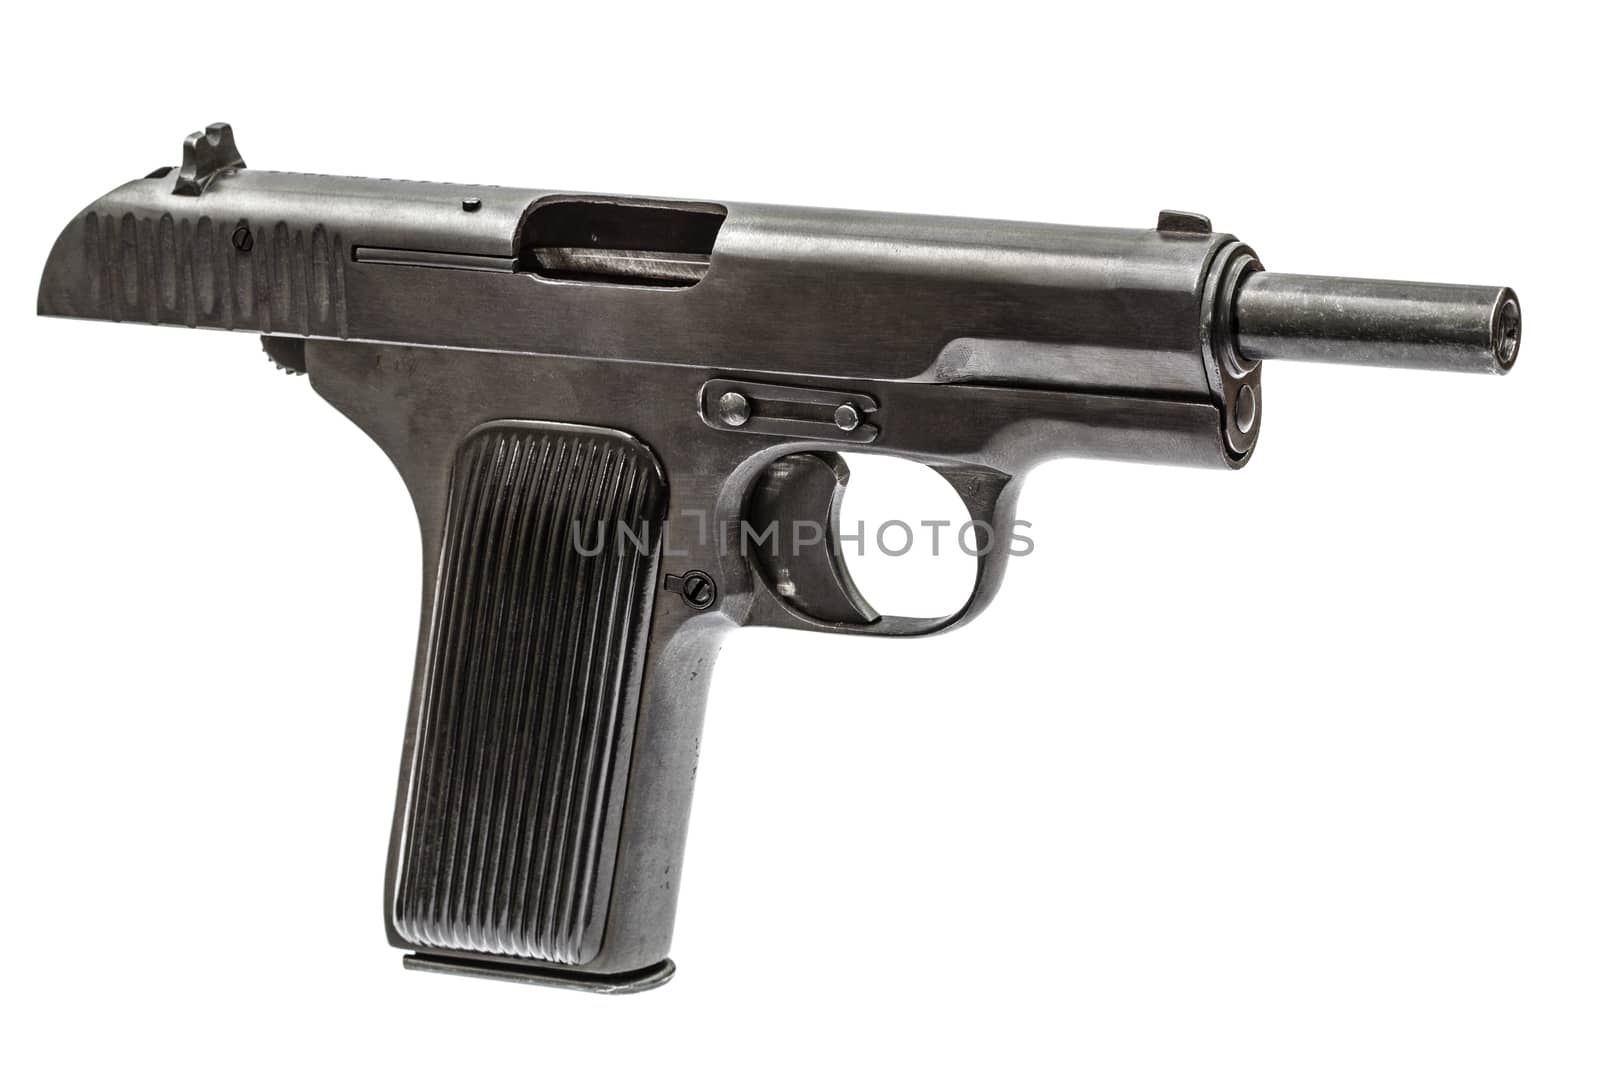 Automatic pistol, isolated on white background